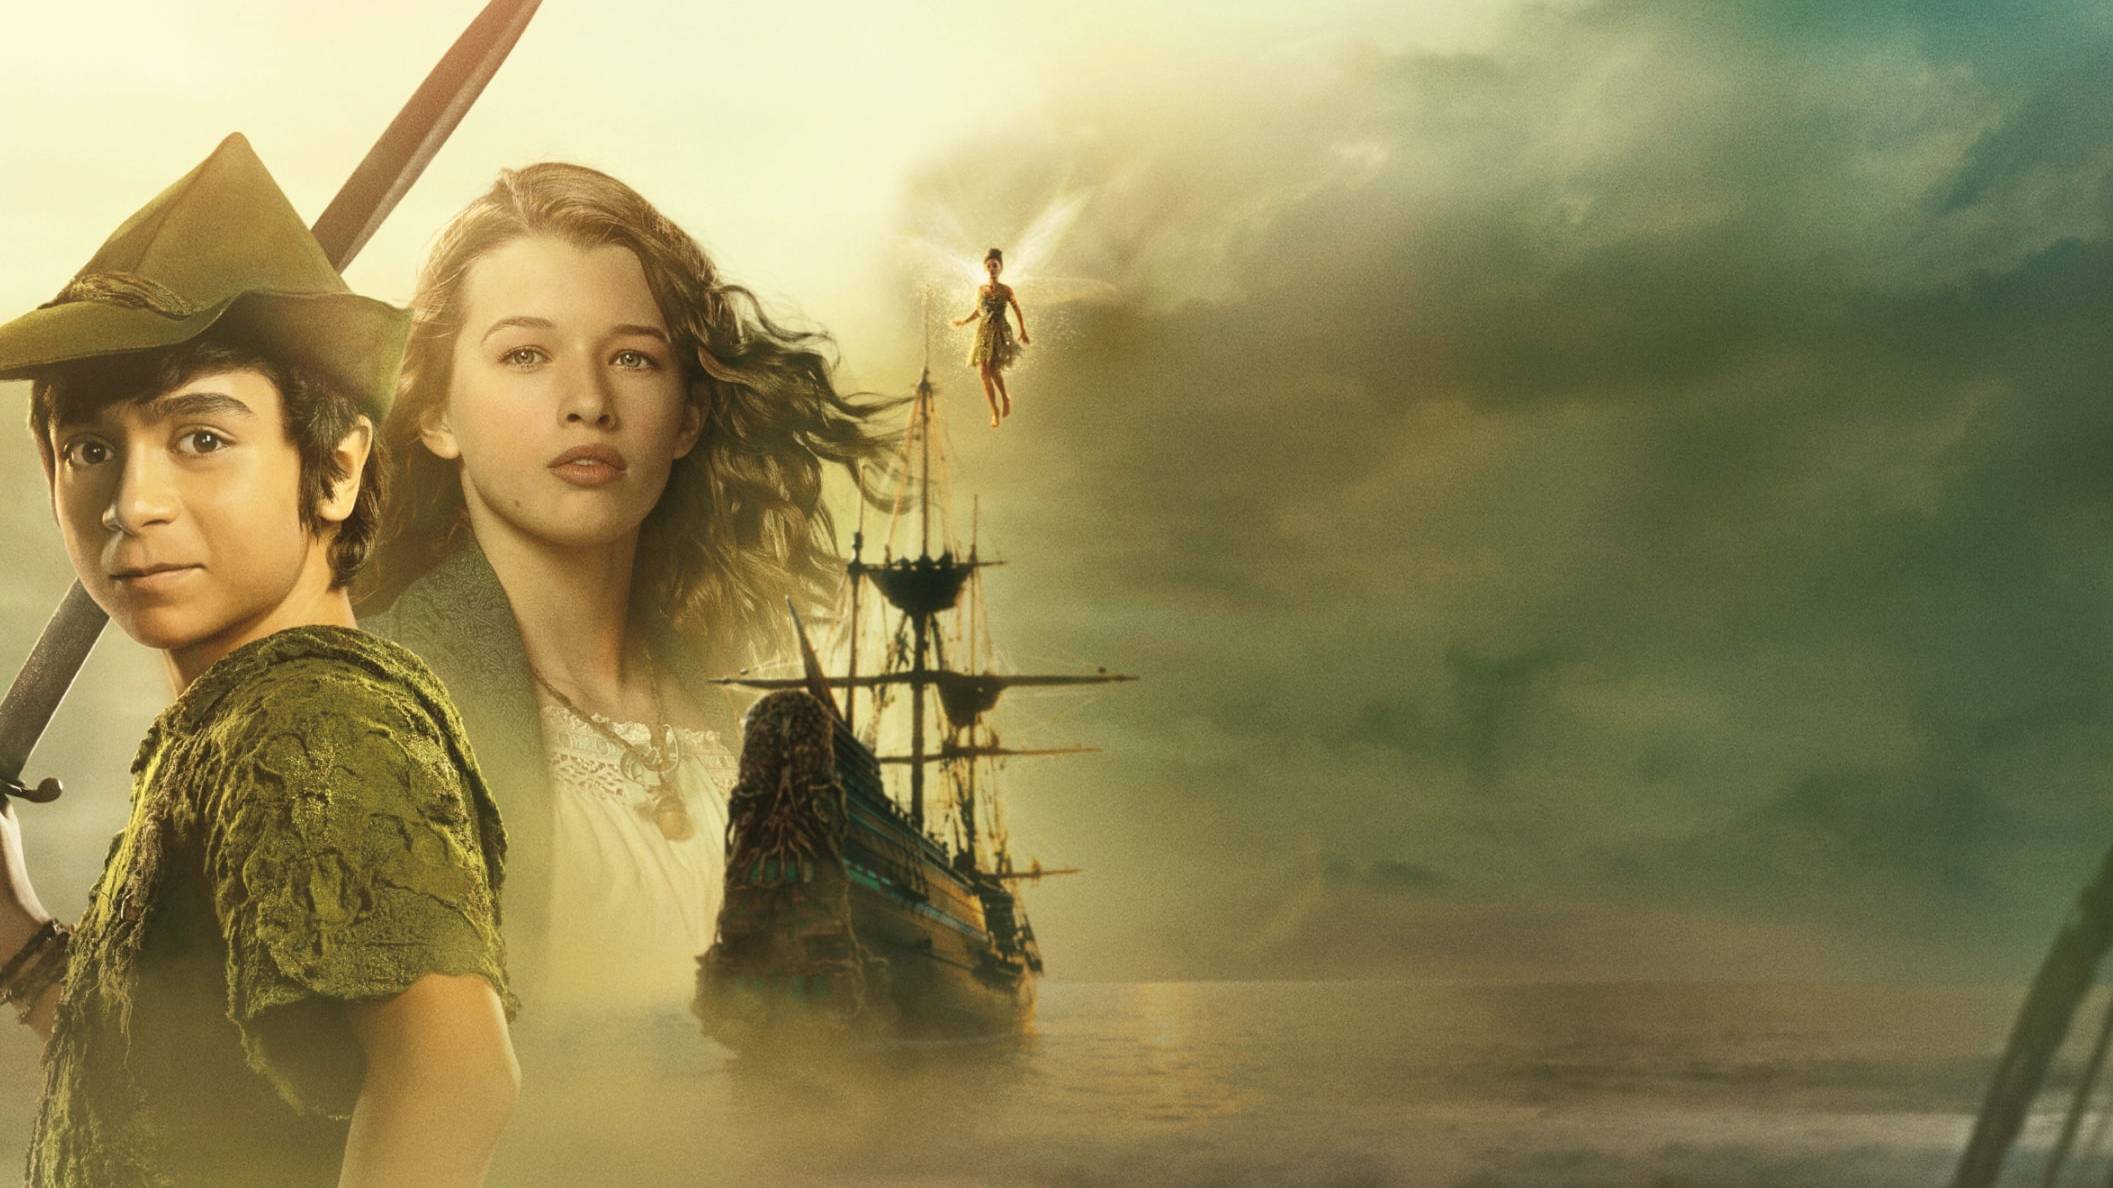 Os 4 motivos para ver 'Peter Pan & Wendy', novo filme live-action do Disney+